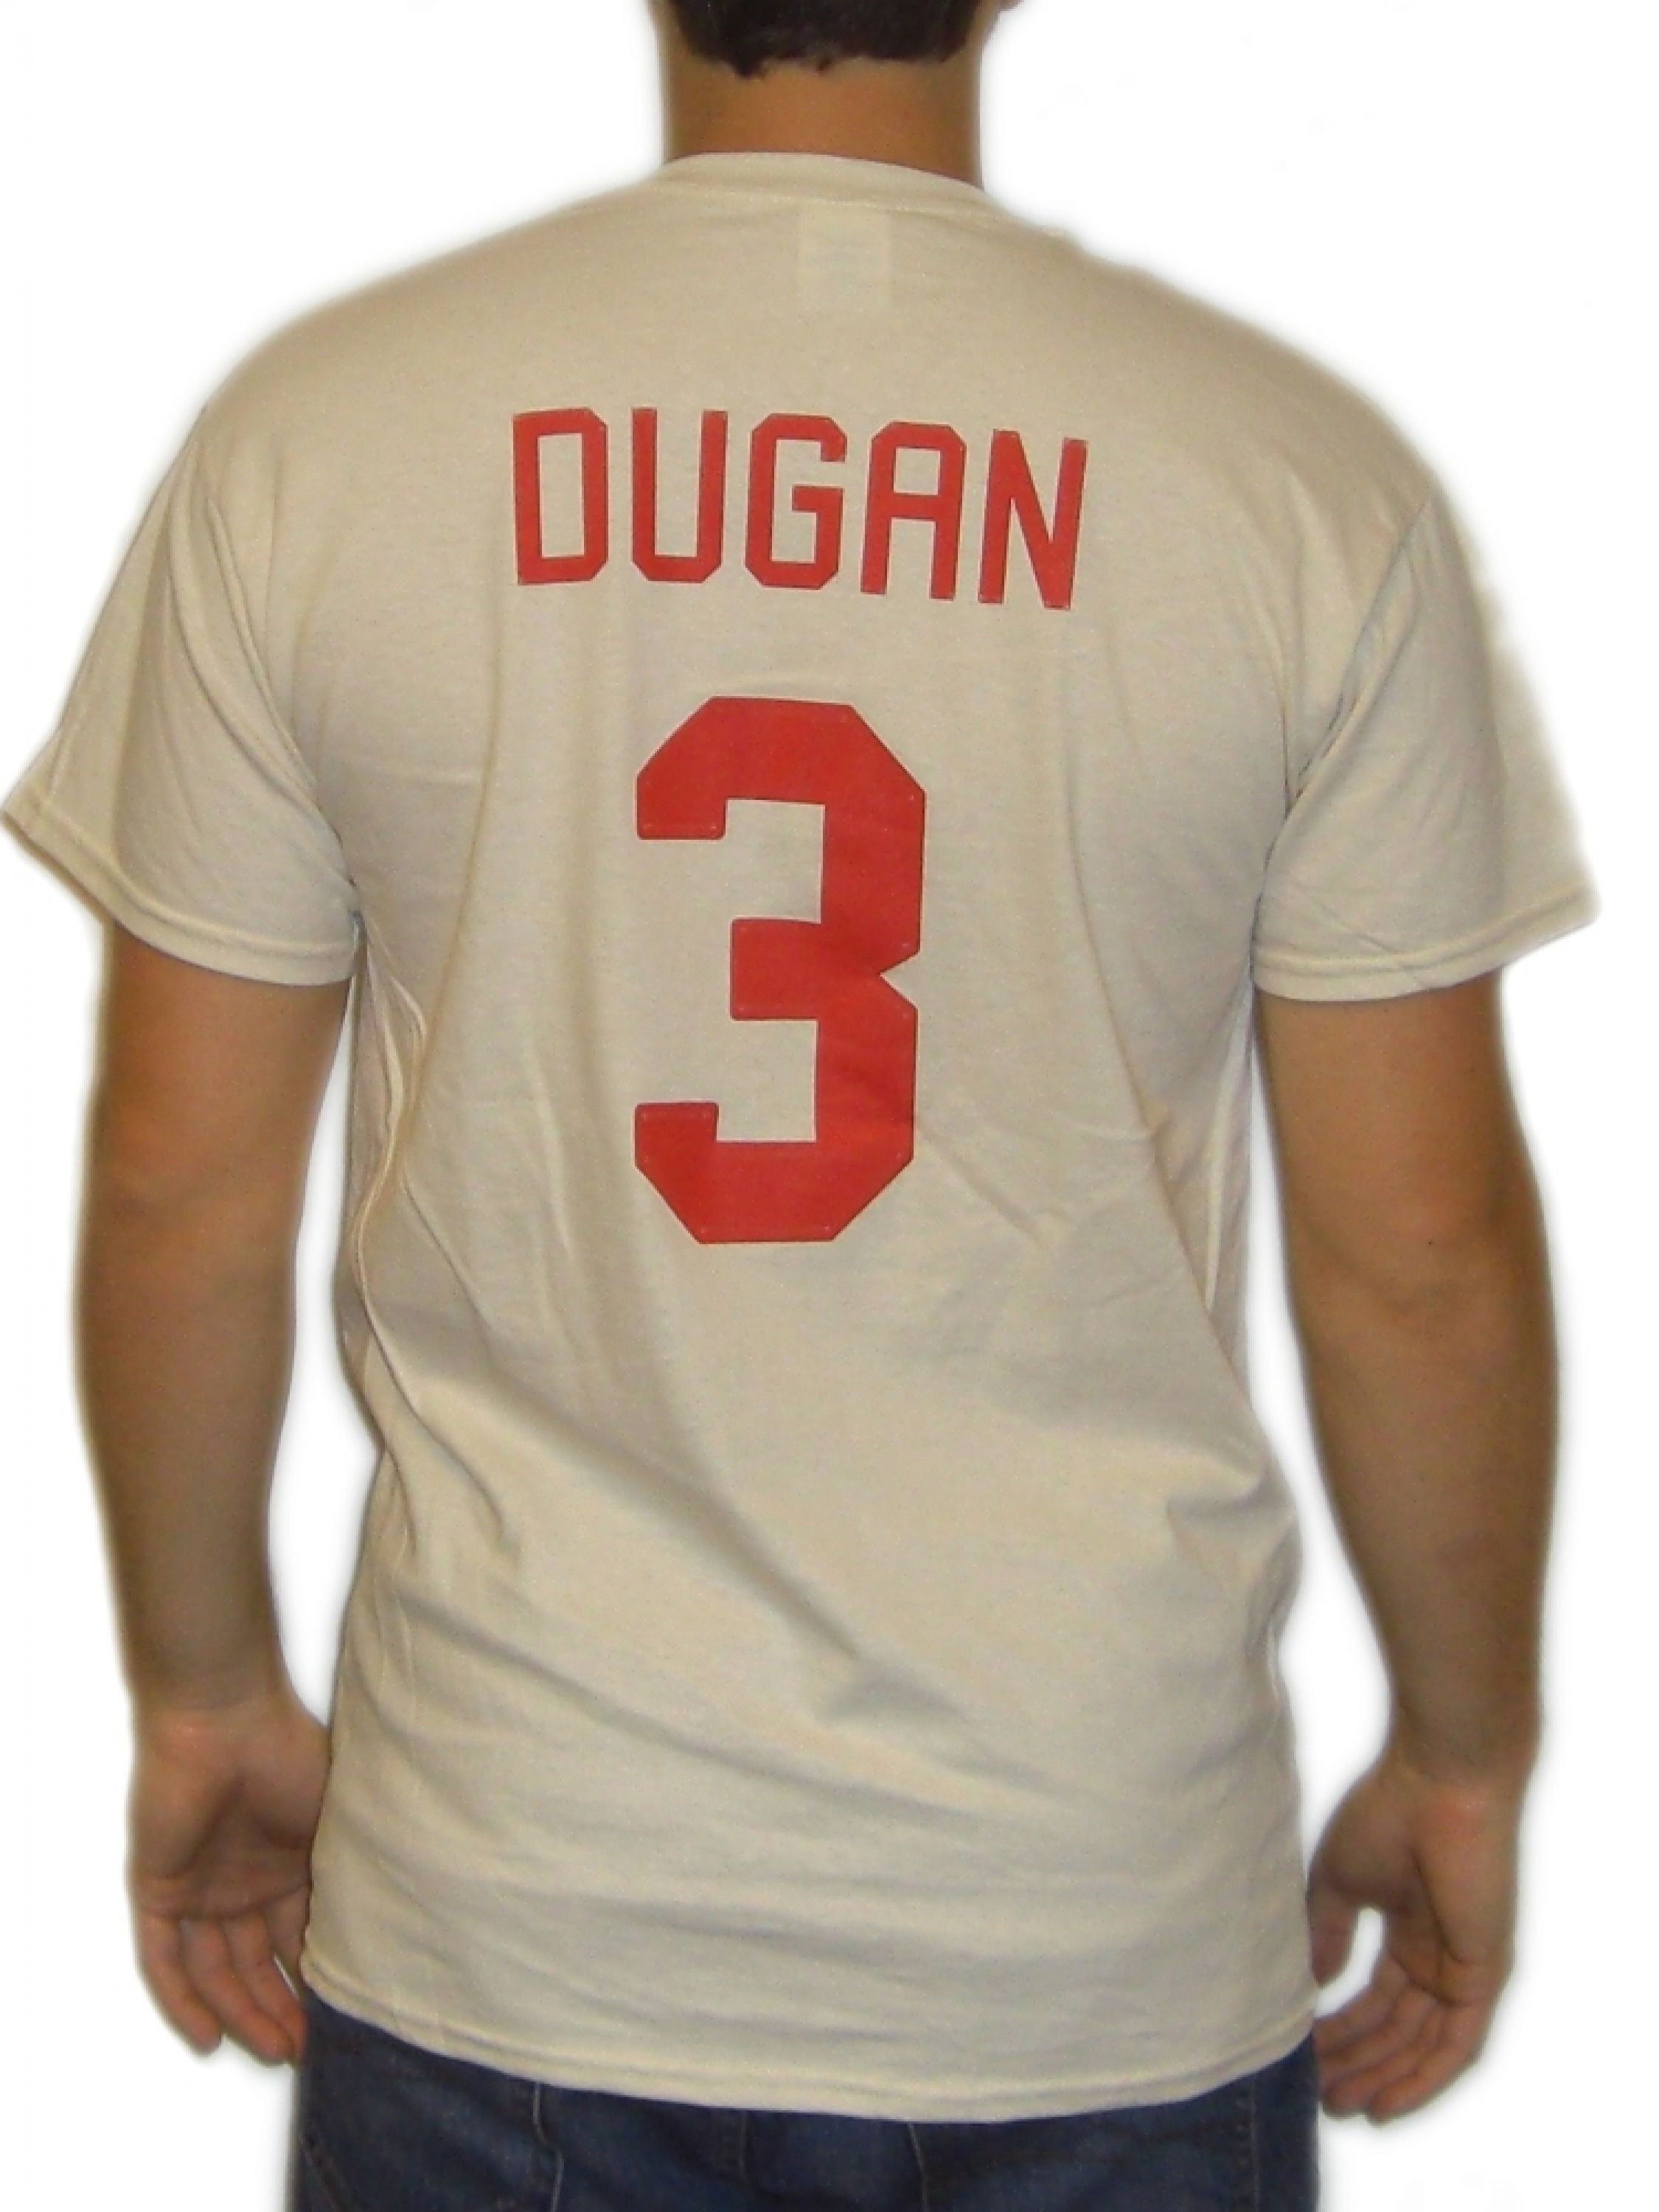 Jimmy Dugan Rockford Peaches Jersey T-Shirt Costume A League of